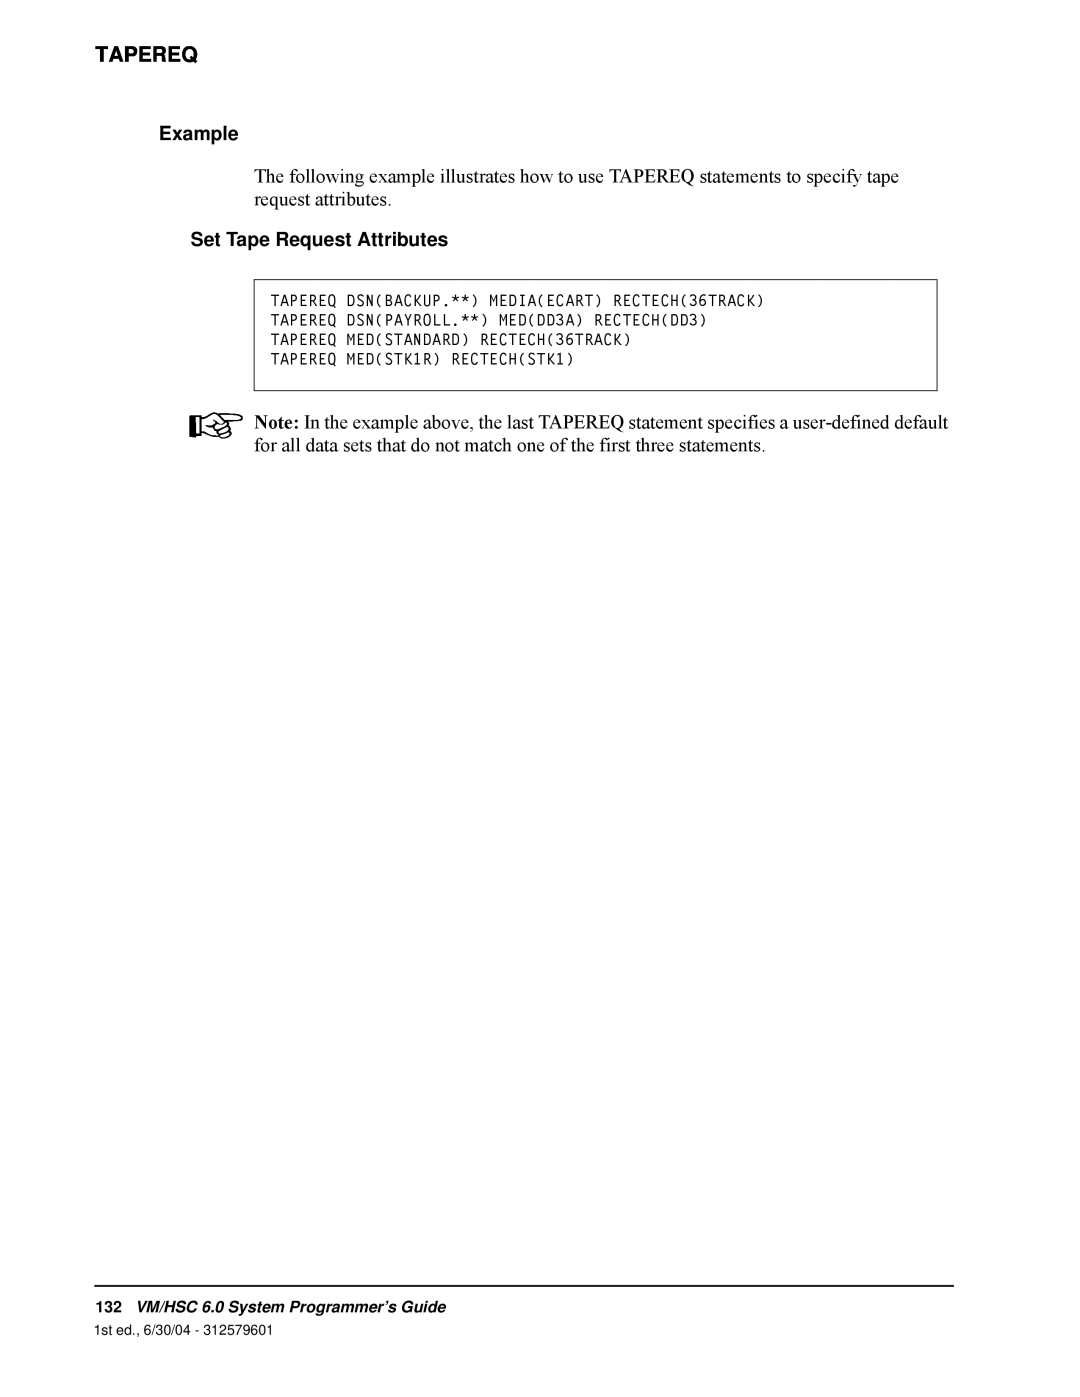 StorageTek manual Set Tape Request Attributes, Tapereq, Example, 132VM/HSC 6.0 System Programmer’s Guide 